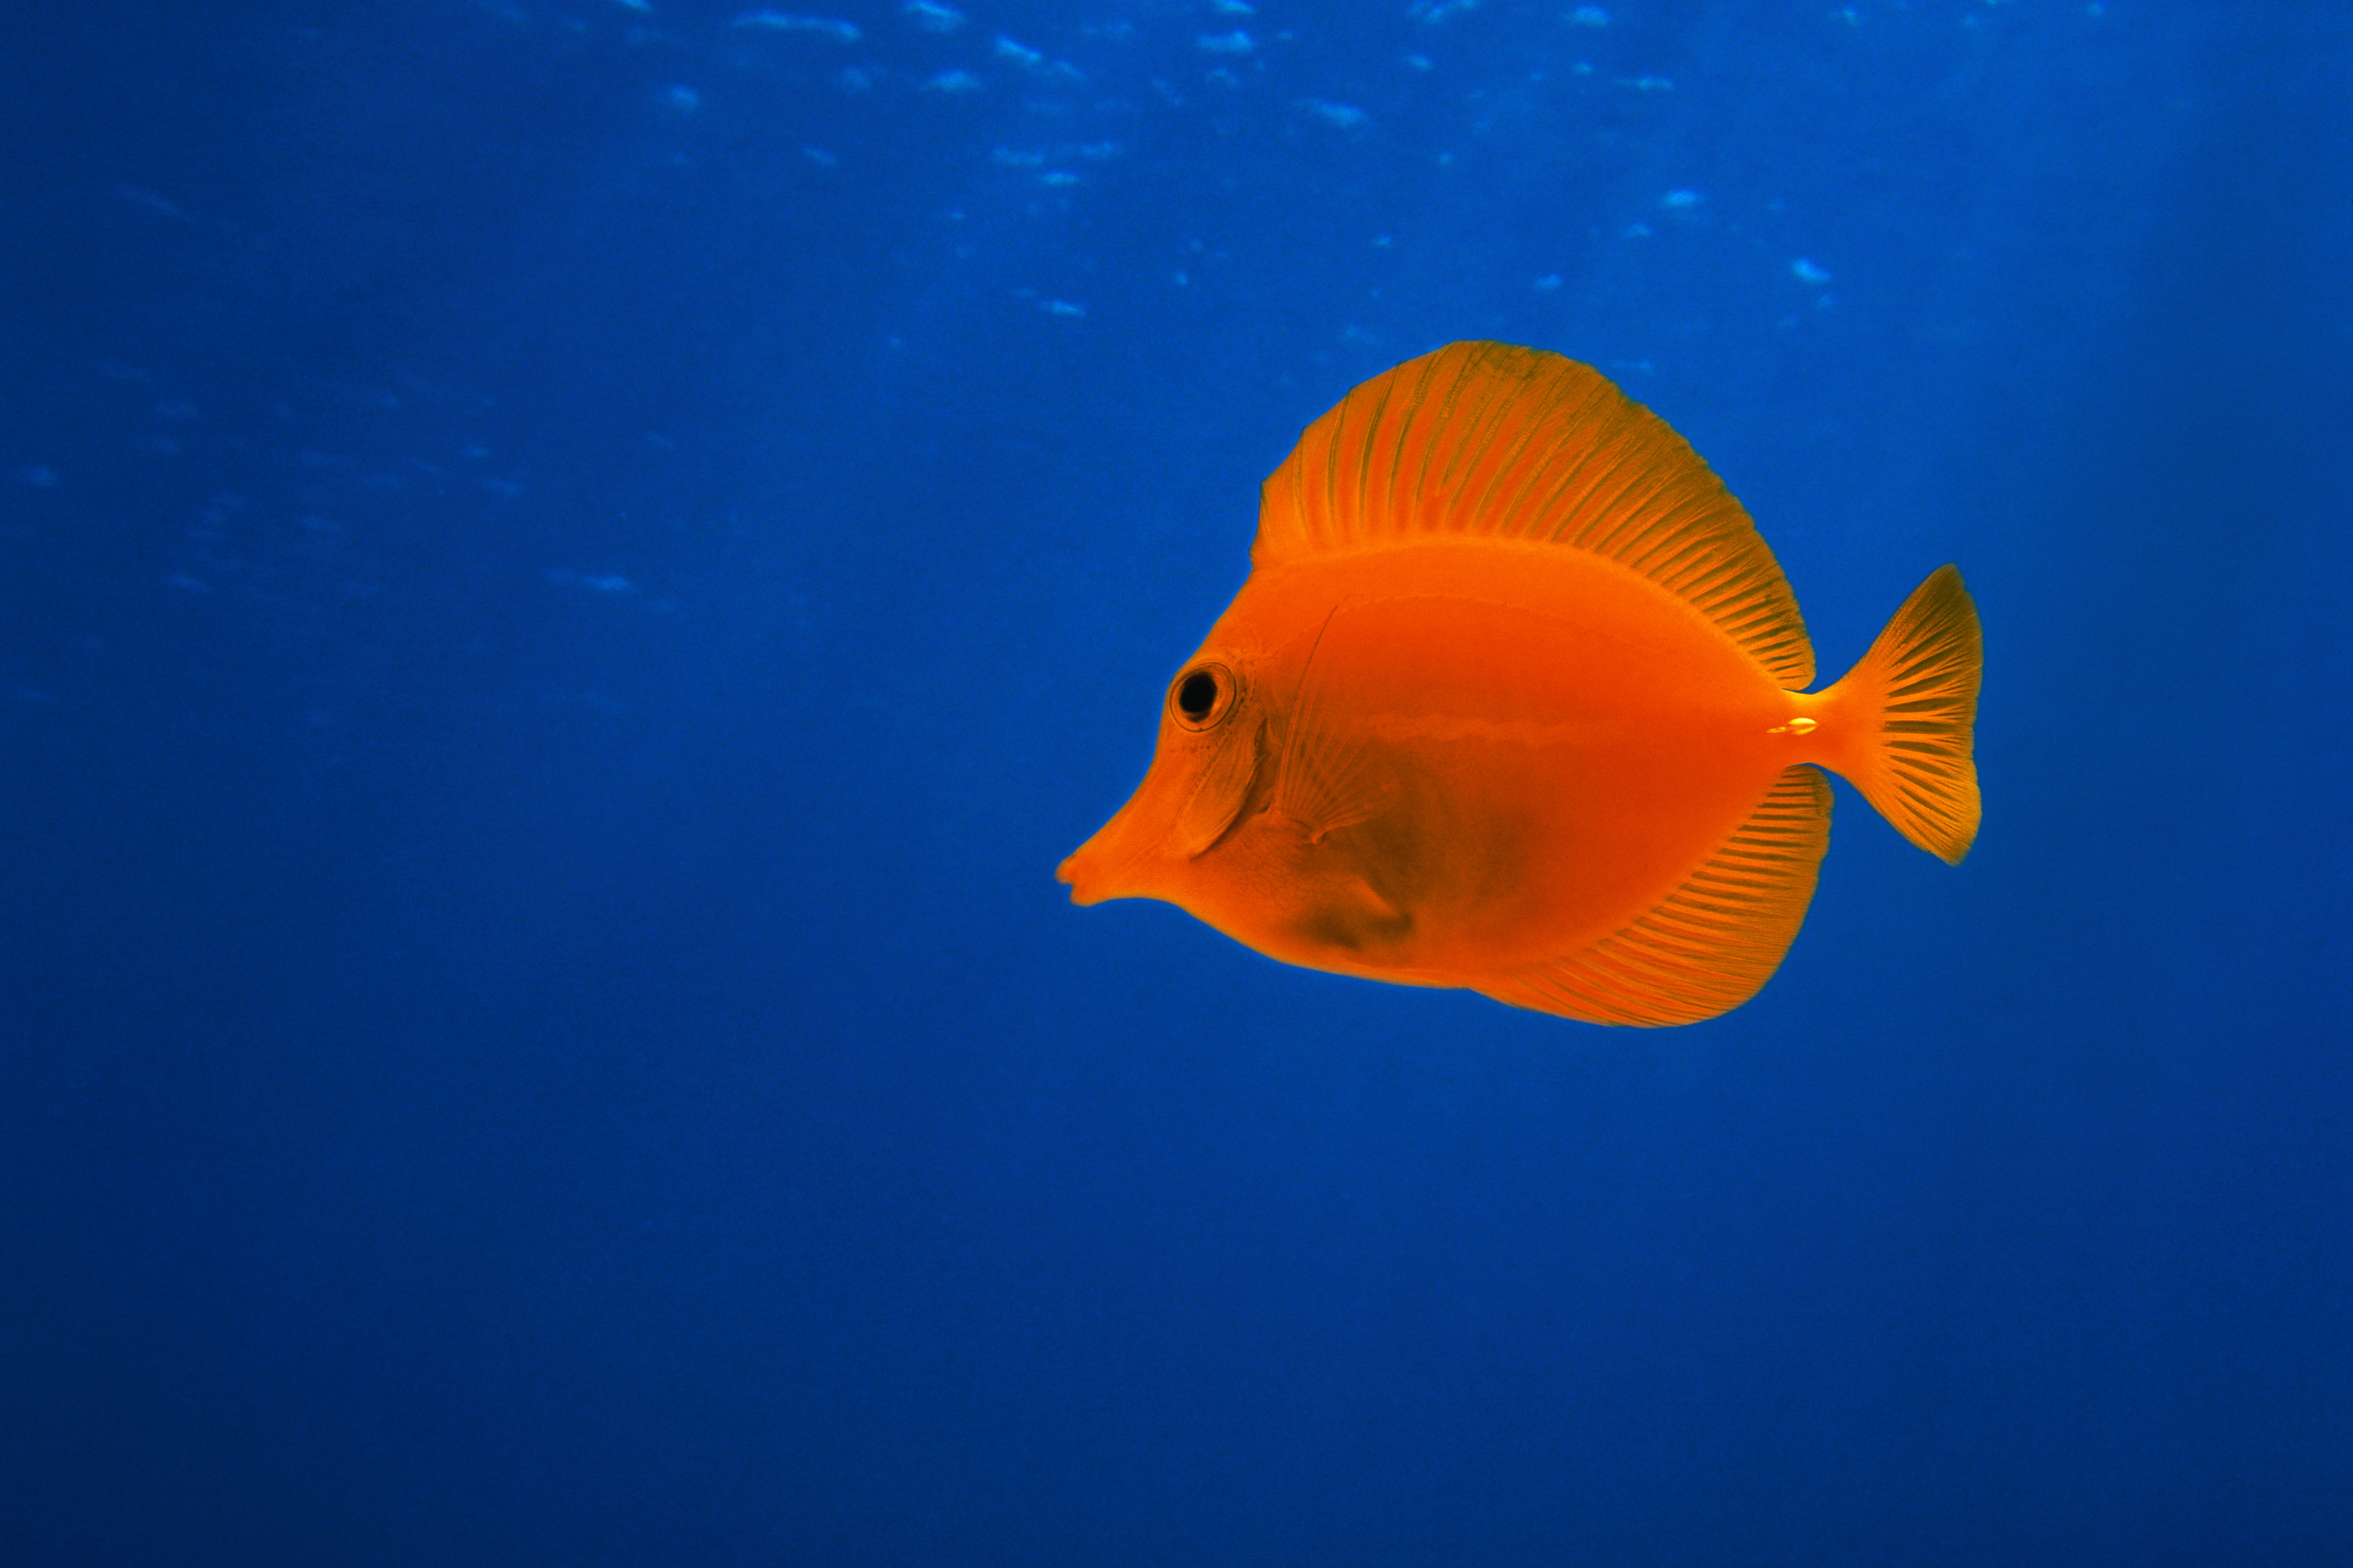 Fish 5k Retina Ultra HD Wallpaper | Background Image ...
